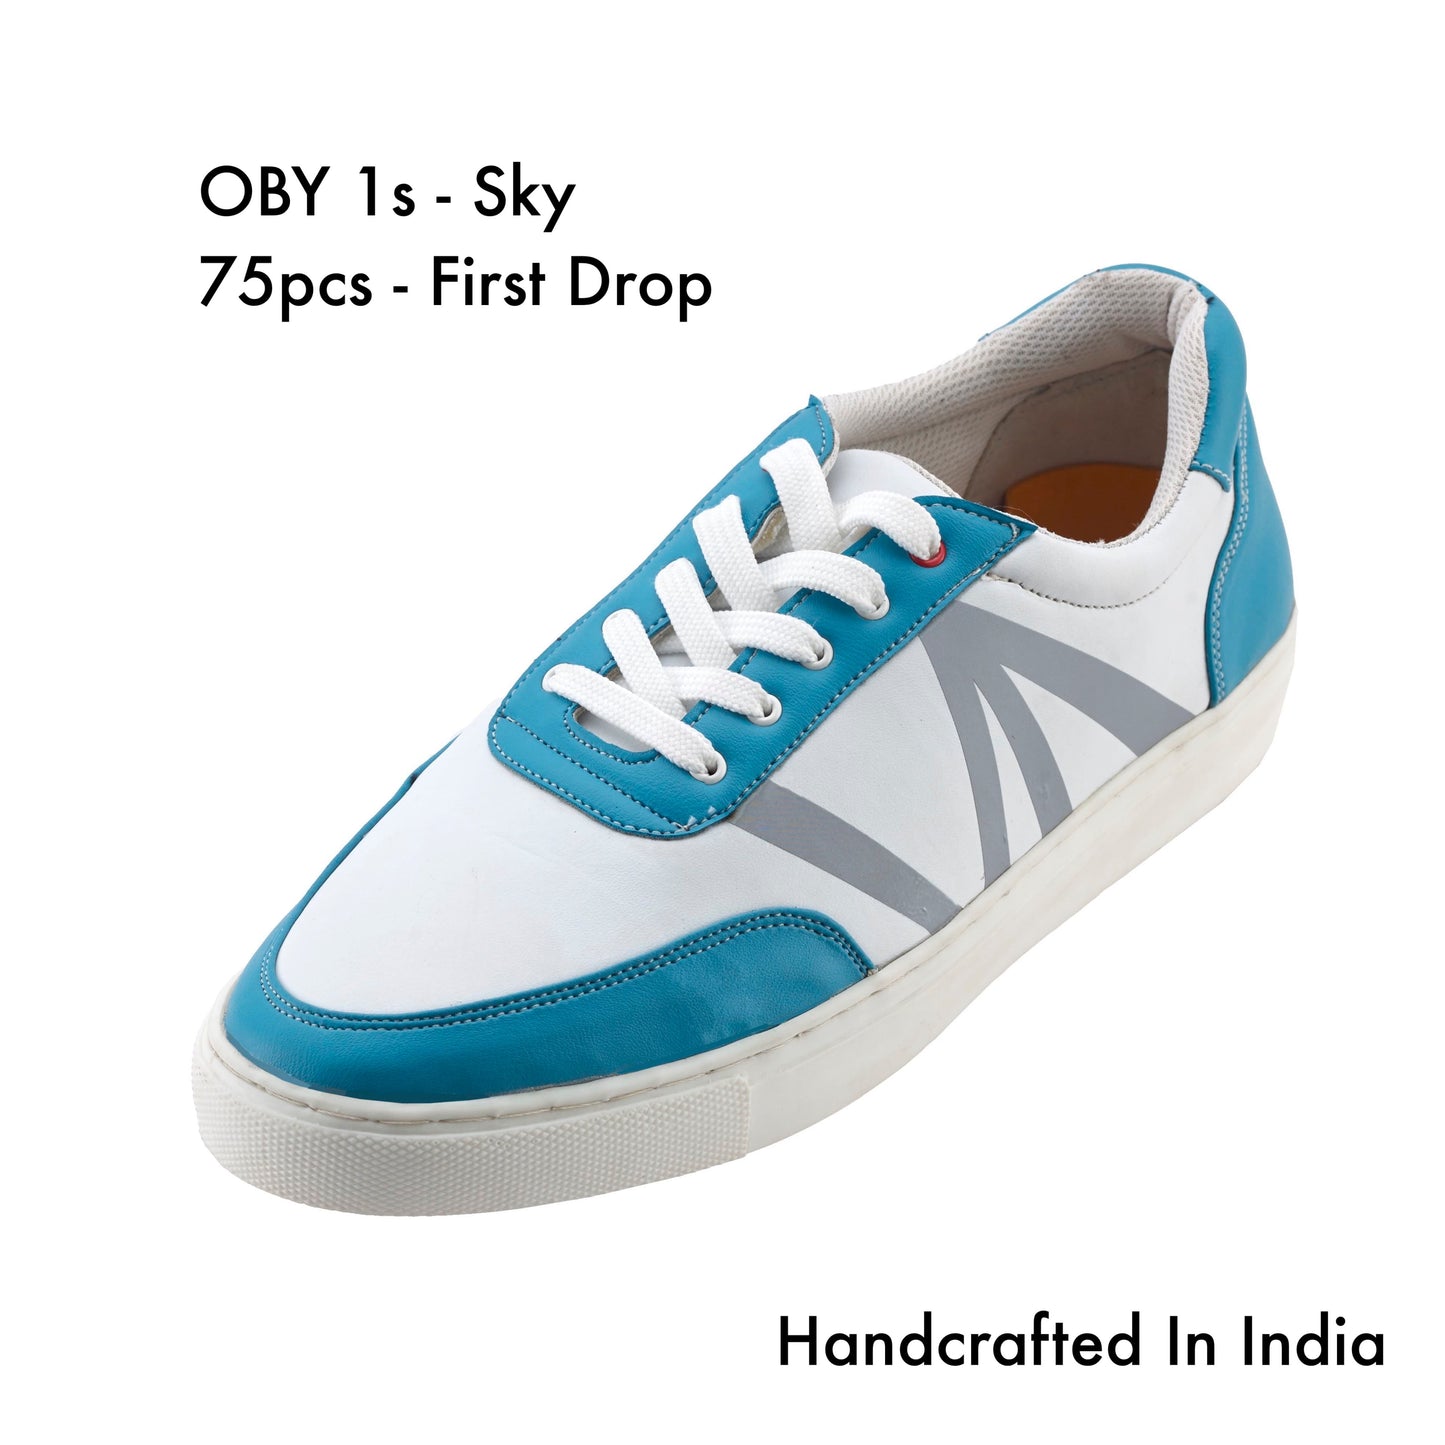 OBY 1s - Sky